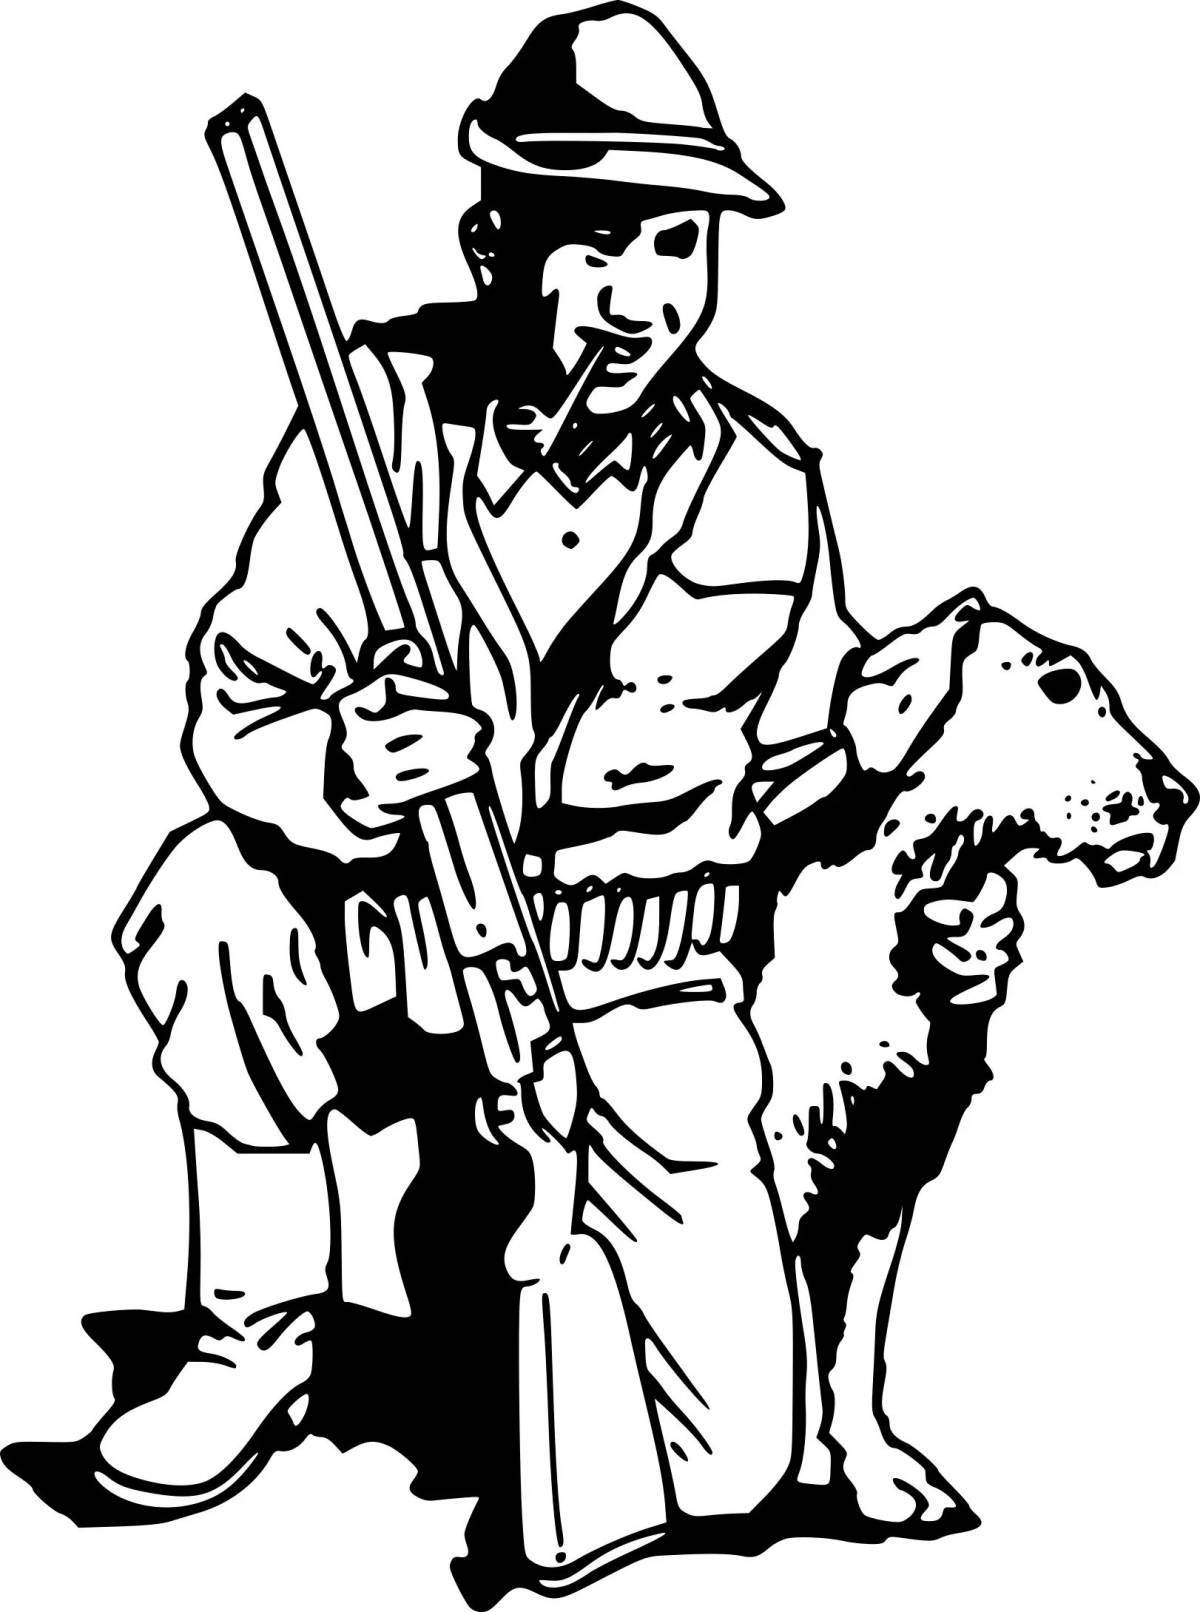 Heroic hunter with a gun coloring book